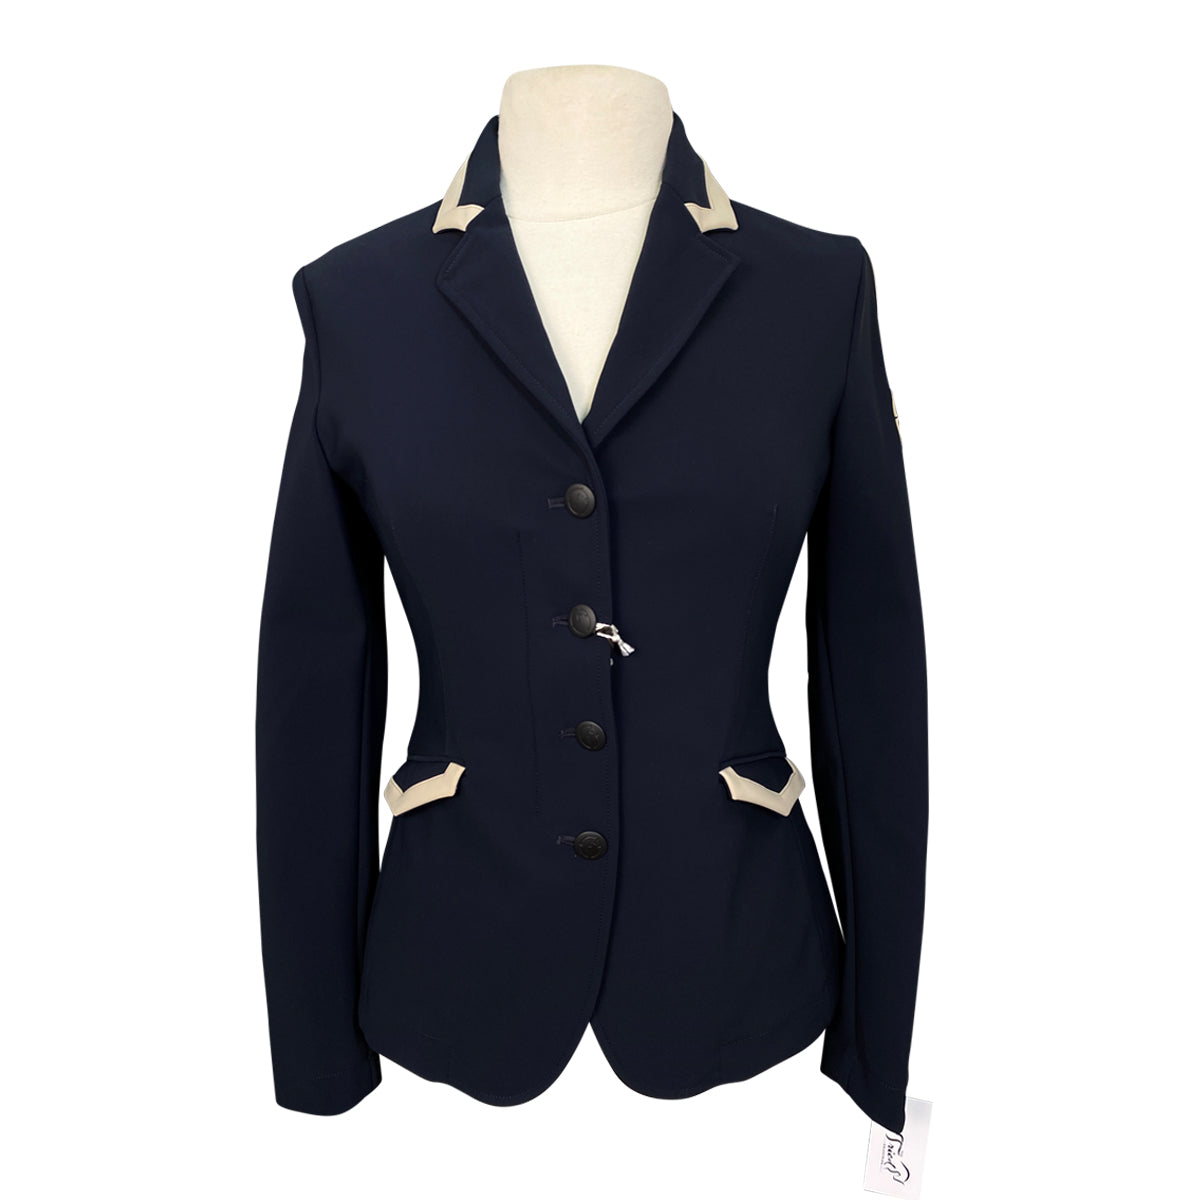 Vestrum &#39;Alessandria&#39; Competition Jacket in Navy/Beige